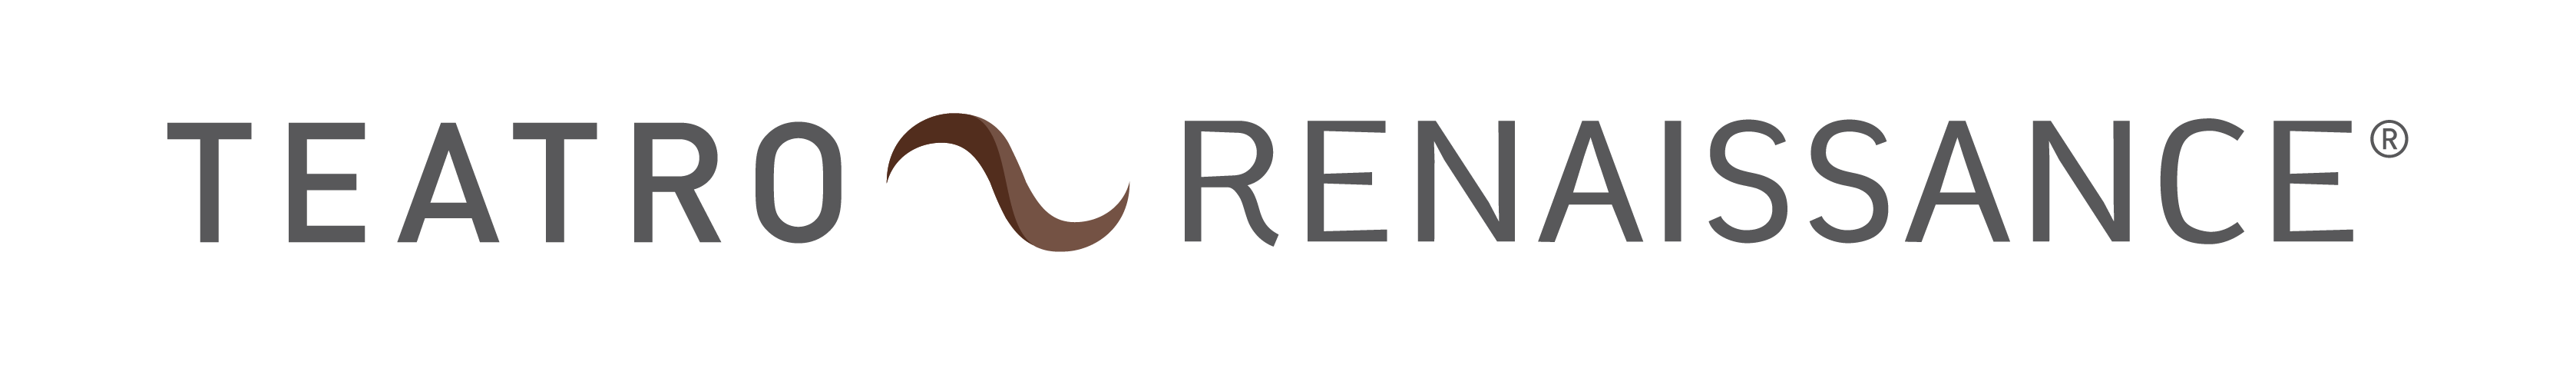 teatro renaissance logo